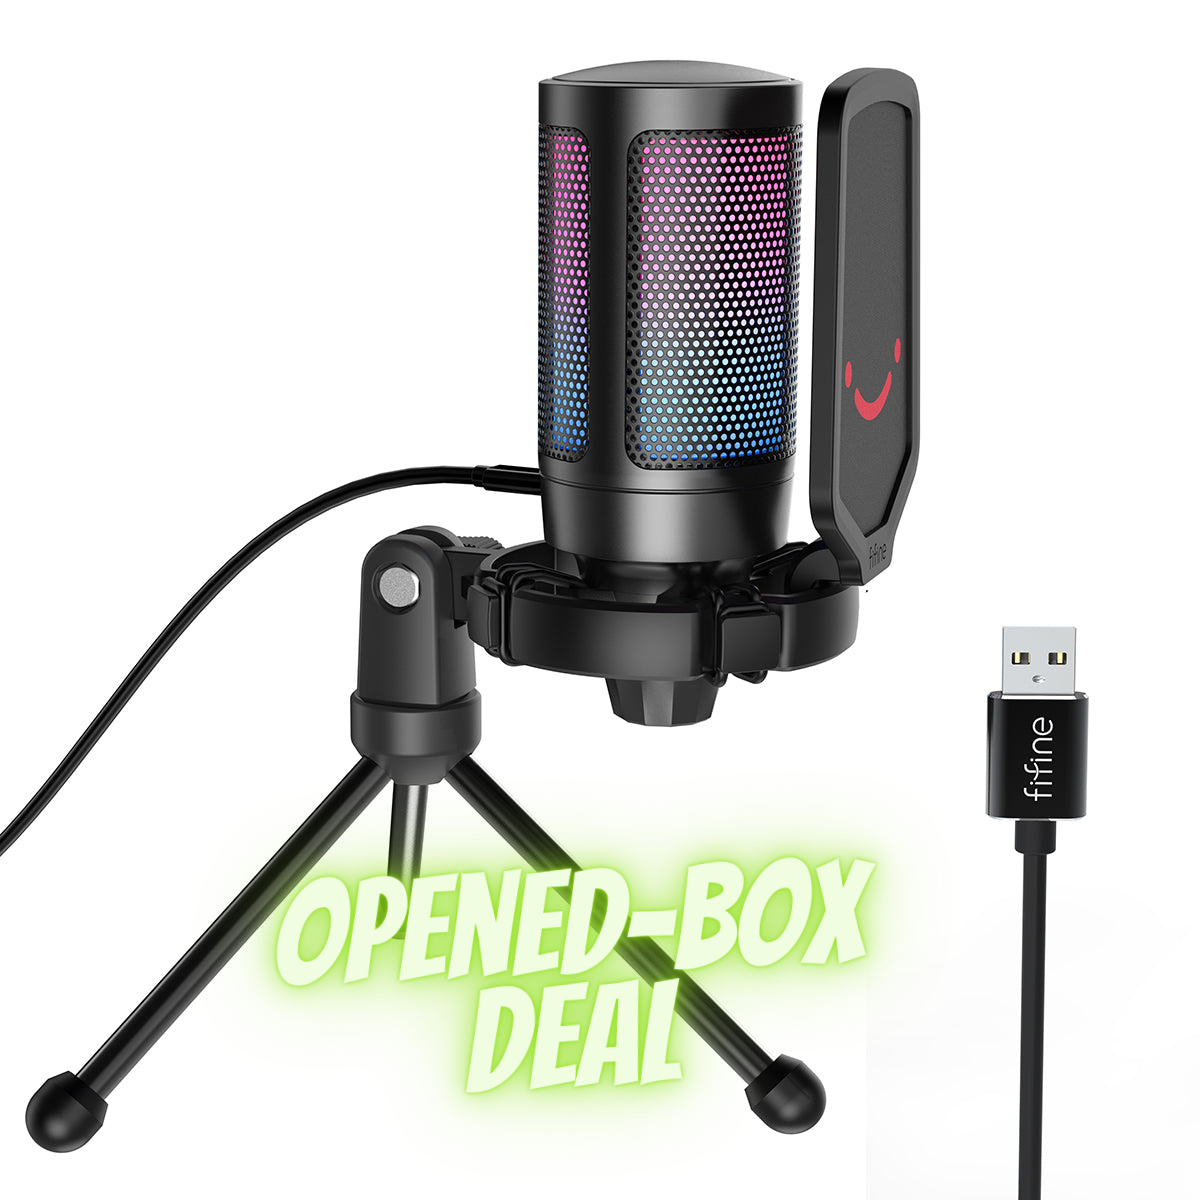 Opened-box FIFINE RGB Ampliamge USB Microphone